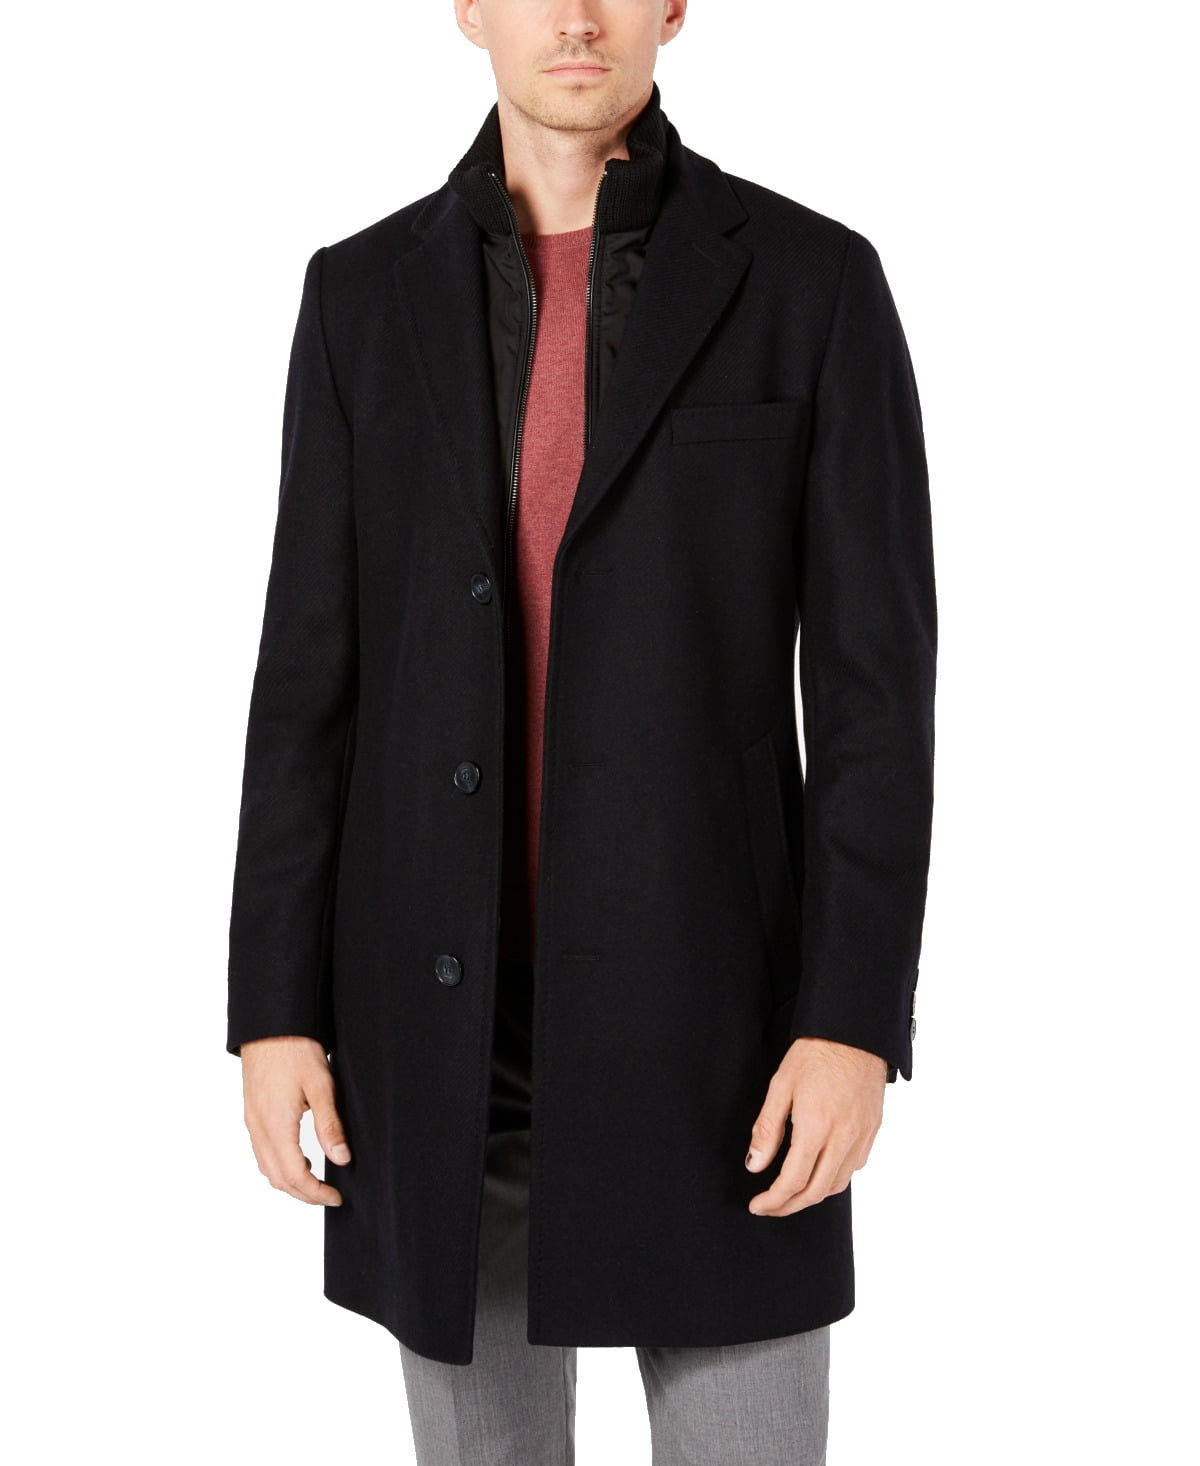 Hugo Boss Coats & Jackets - Mens Coat Deep Jacket Layered Look Peacoat ...